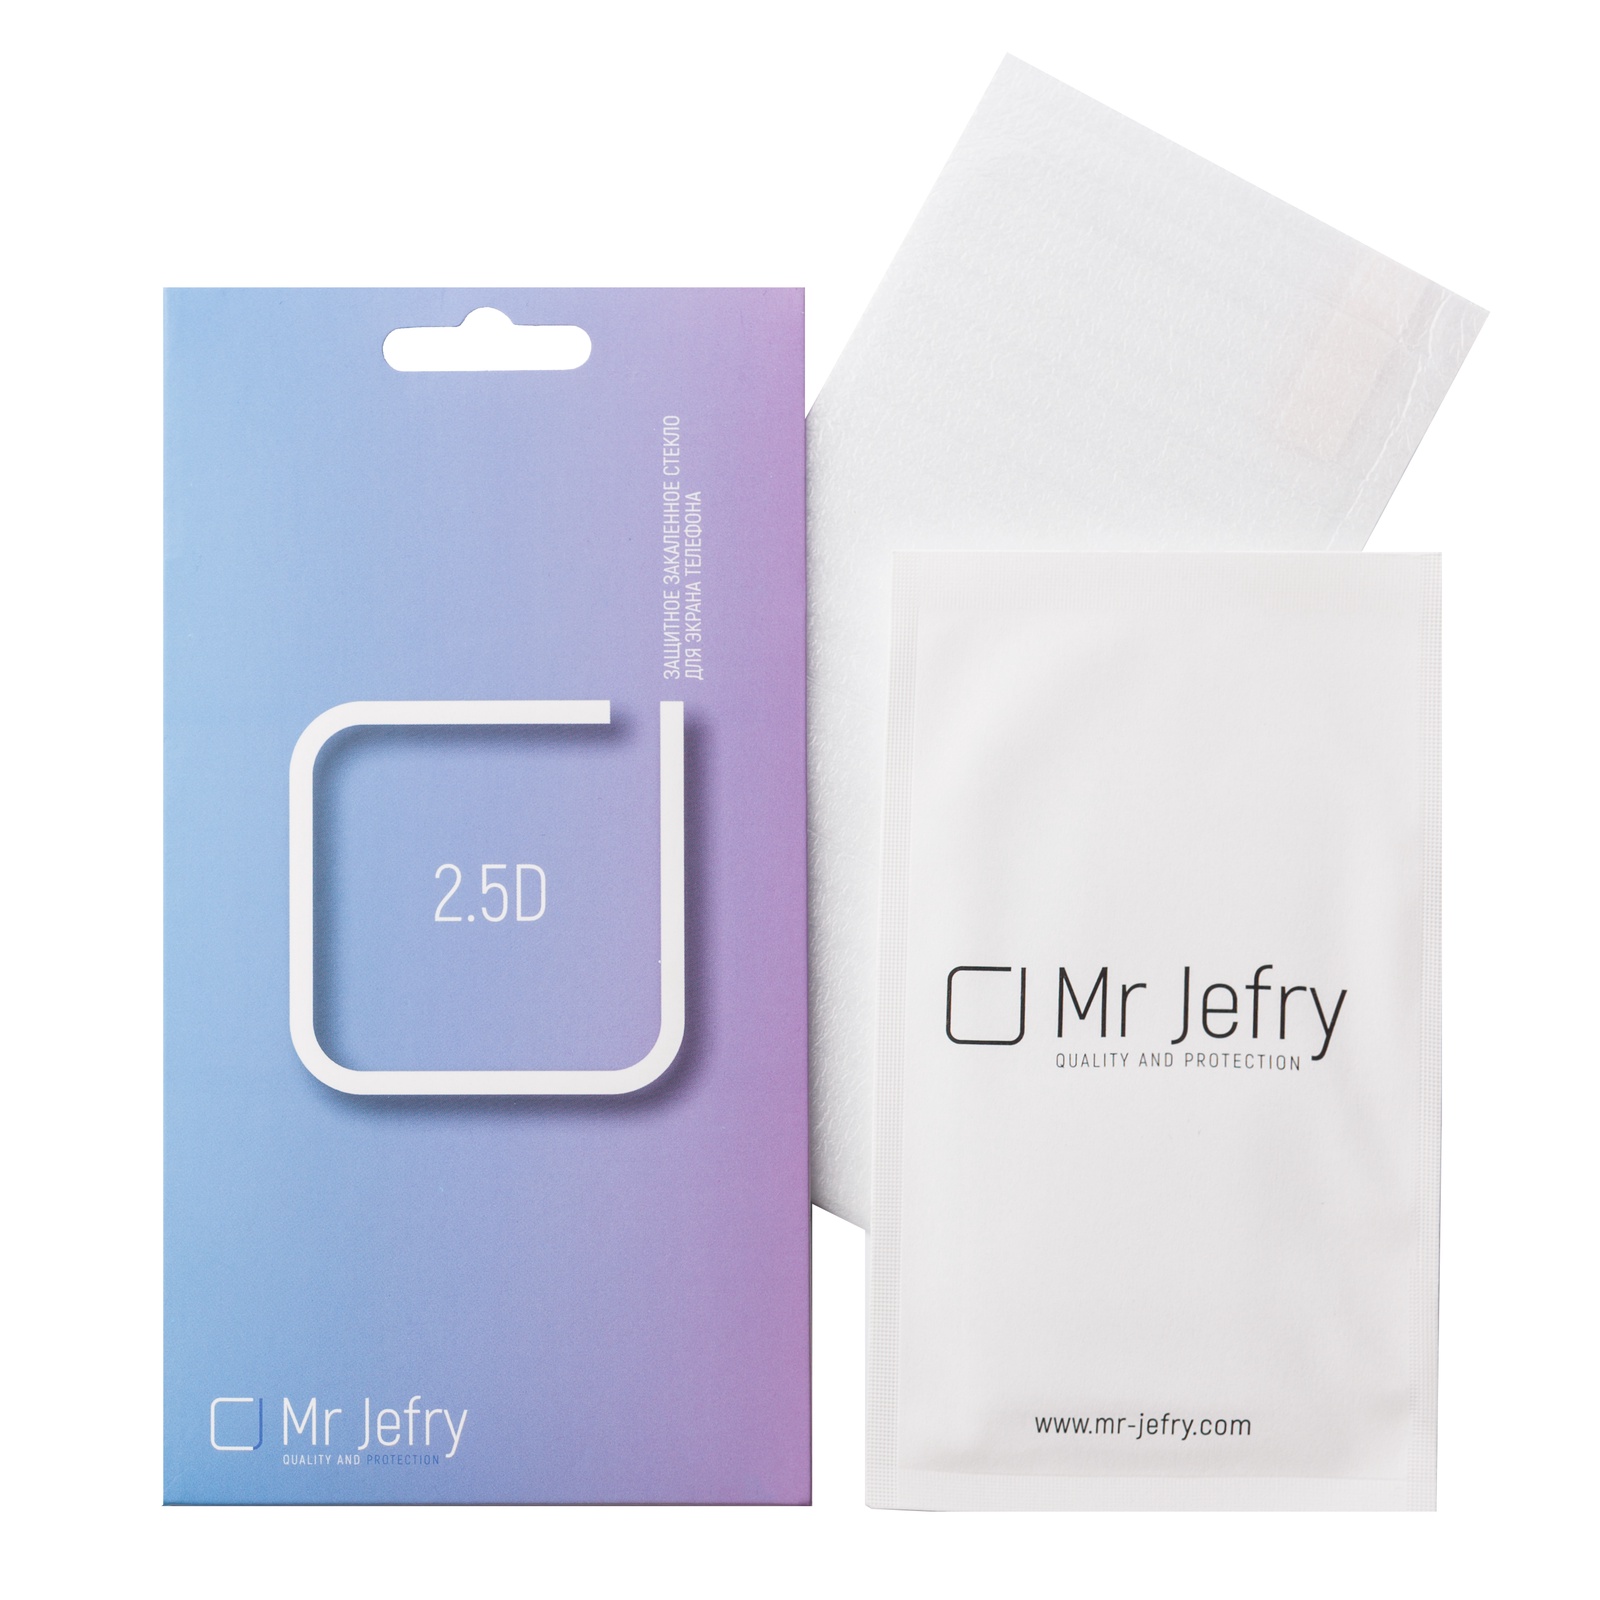 фото Mr Jefry стекло защитное (многослойное) 2,5D для IPhone xs max